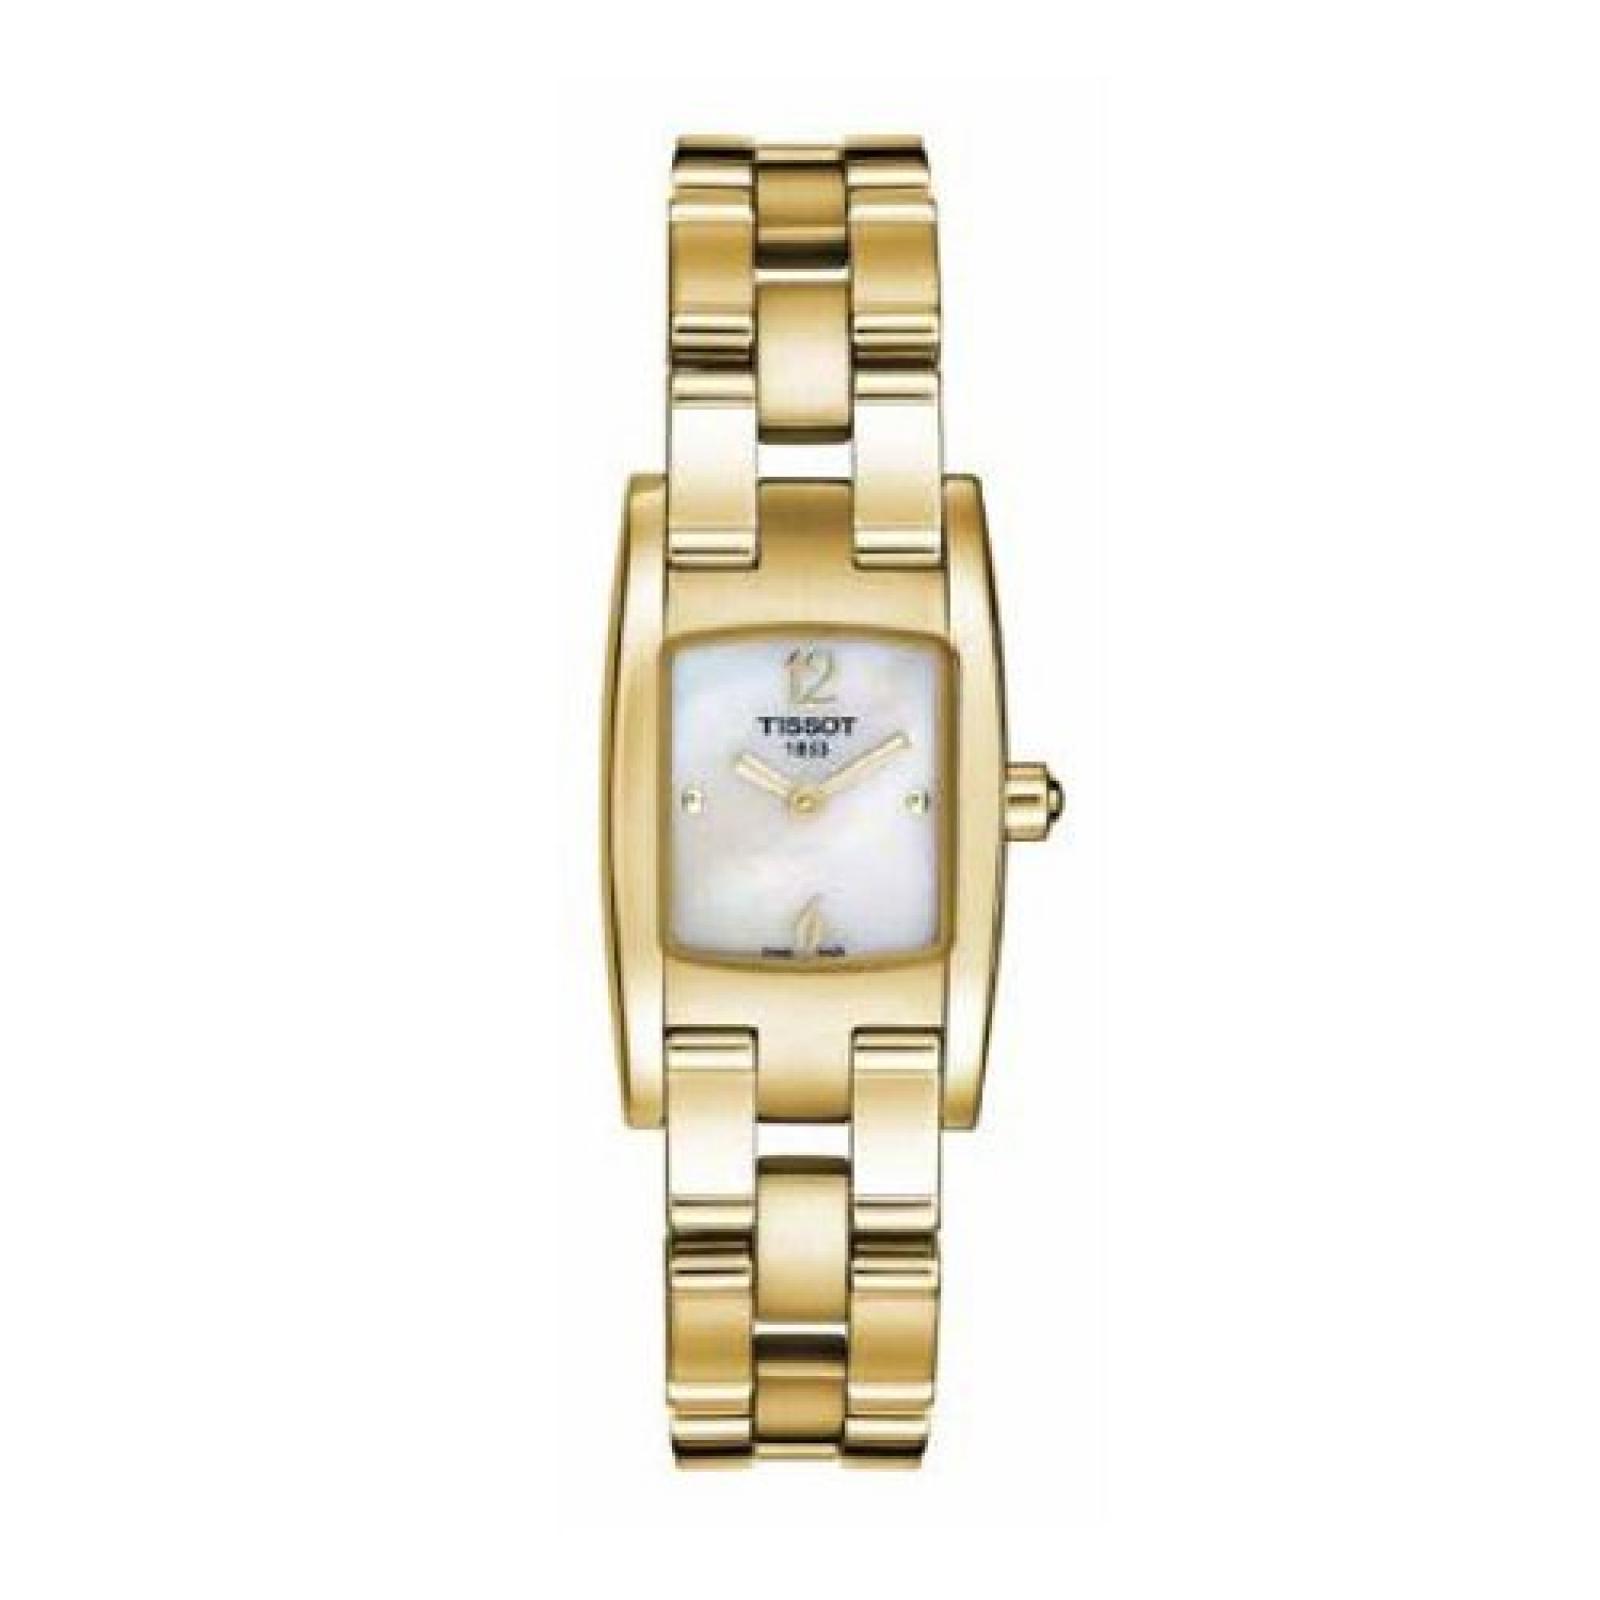 Tissot Ladies T-Trend T3 Gold Tone Bracelet Watch - T0421093311700 